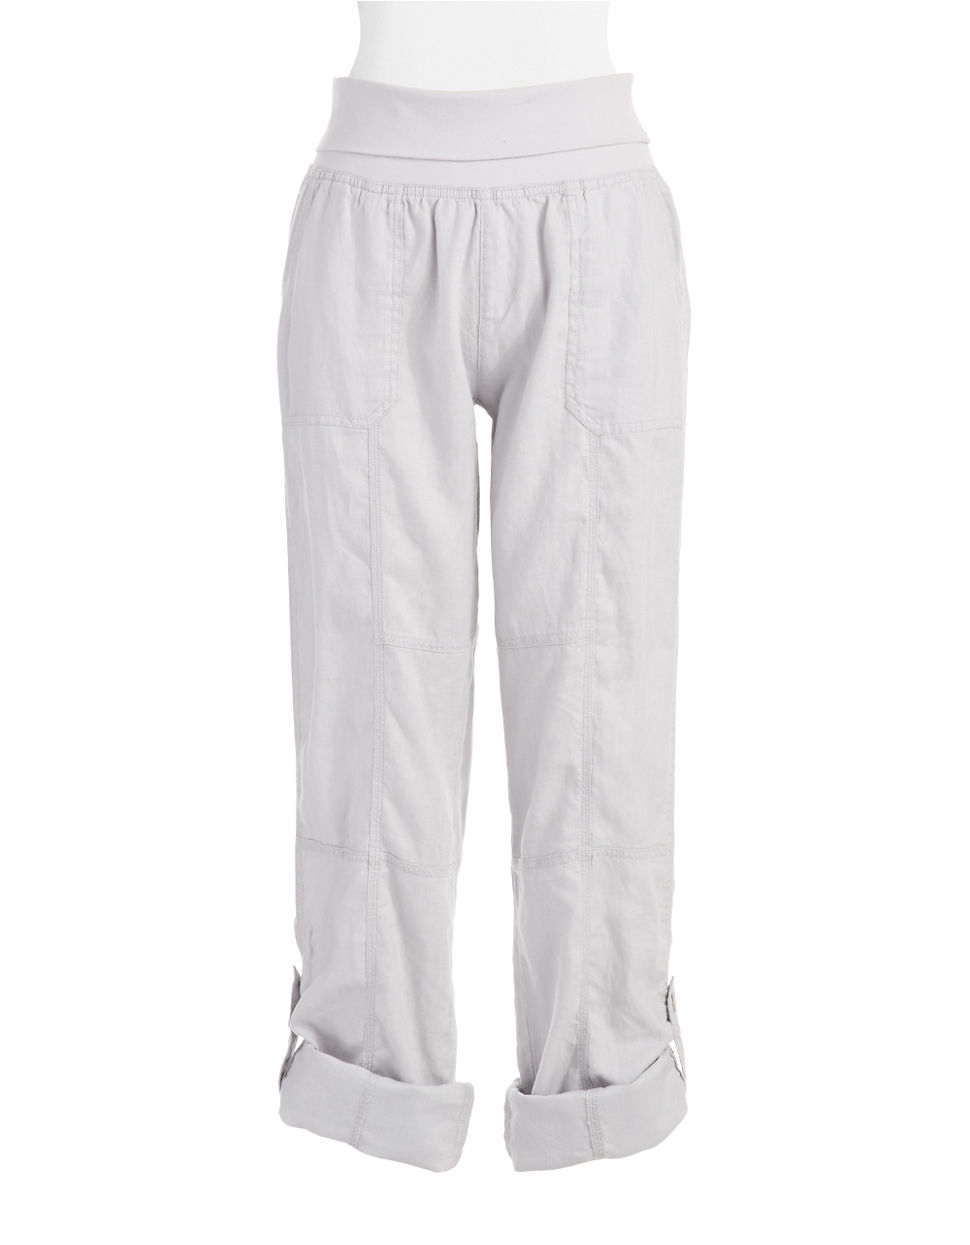 Calvin klein Linen Performance Pants in Gray (Pale Grey) | Lyst